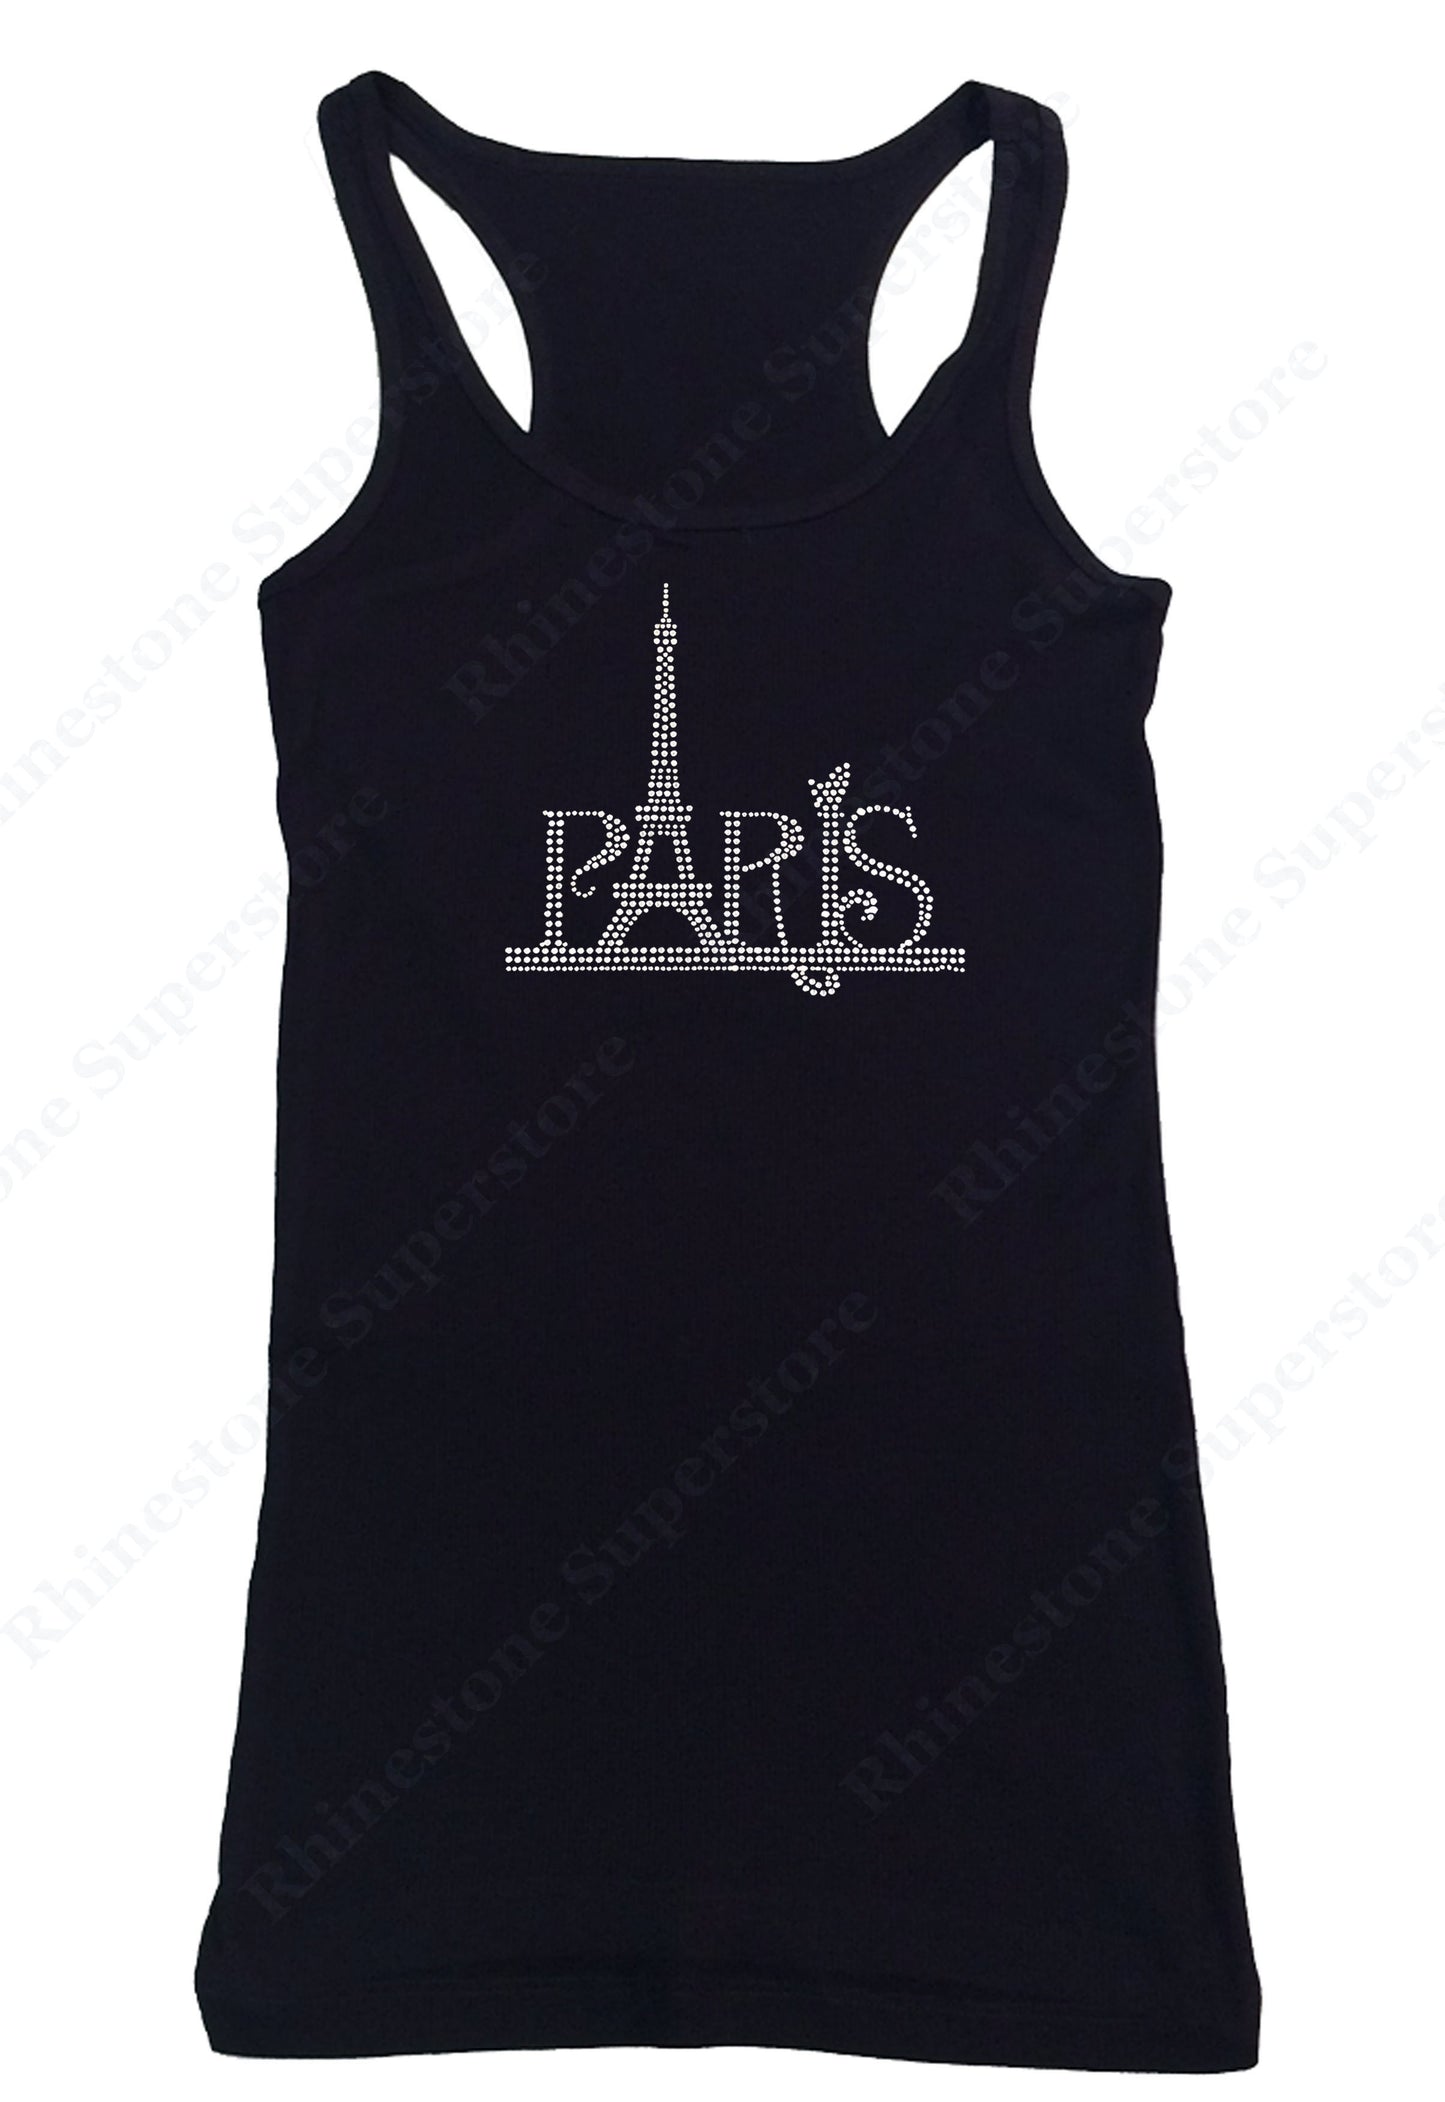 Womens T-shirt with Paris Eiffel Tower in Rhinestones